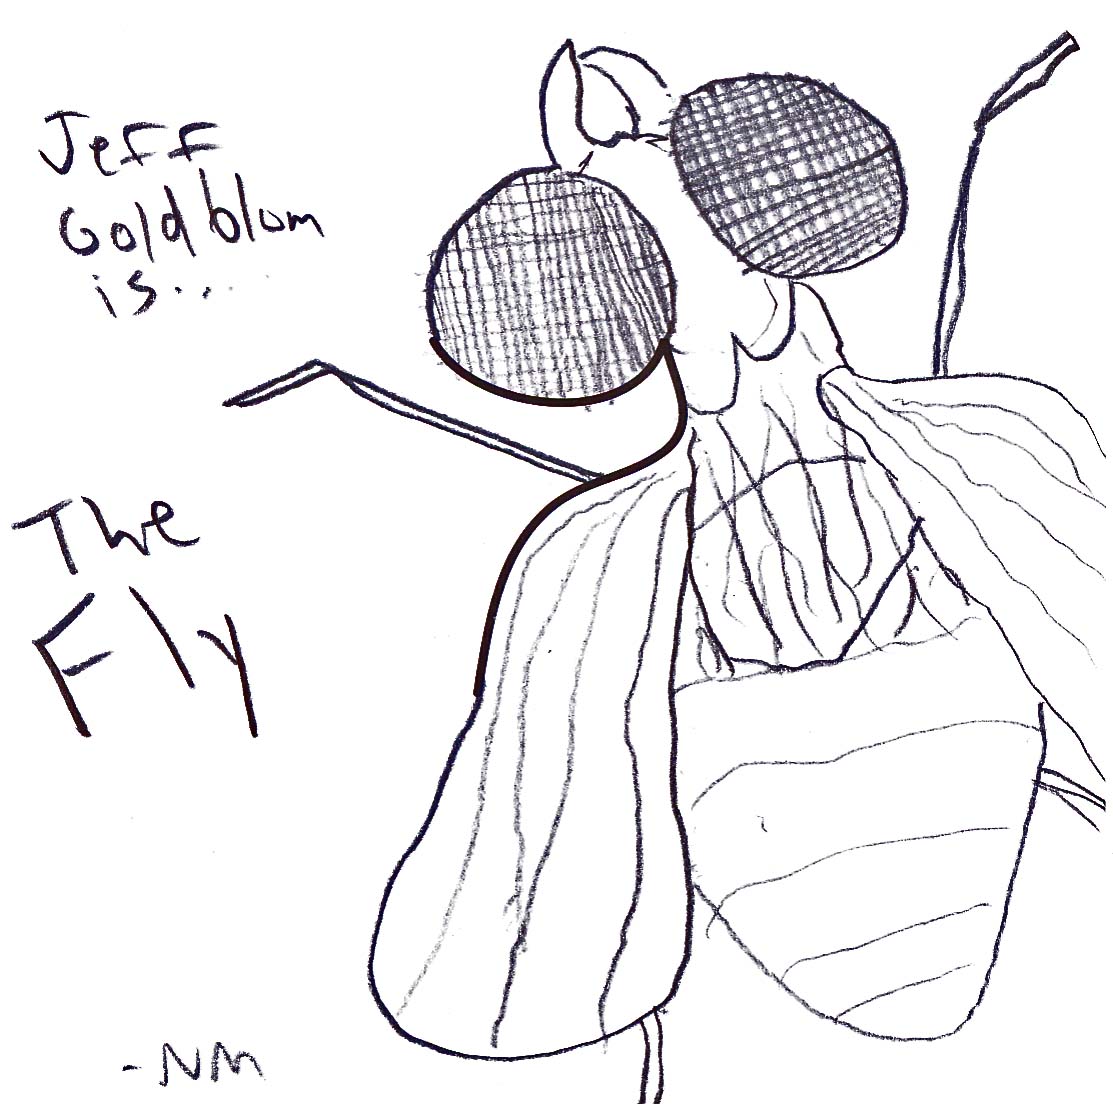 Jeff Goldblum is the fly